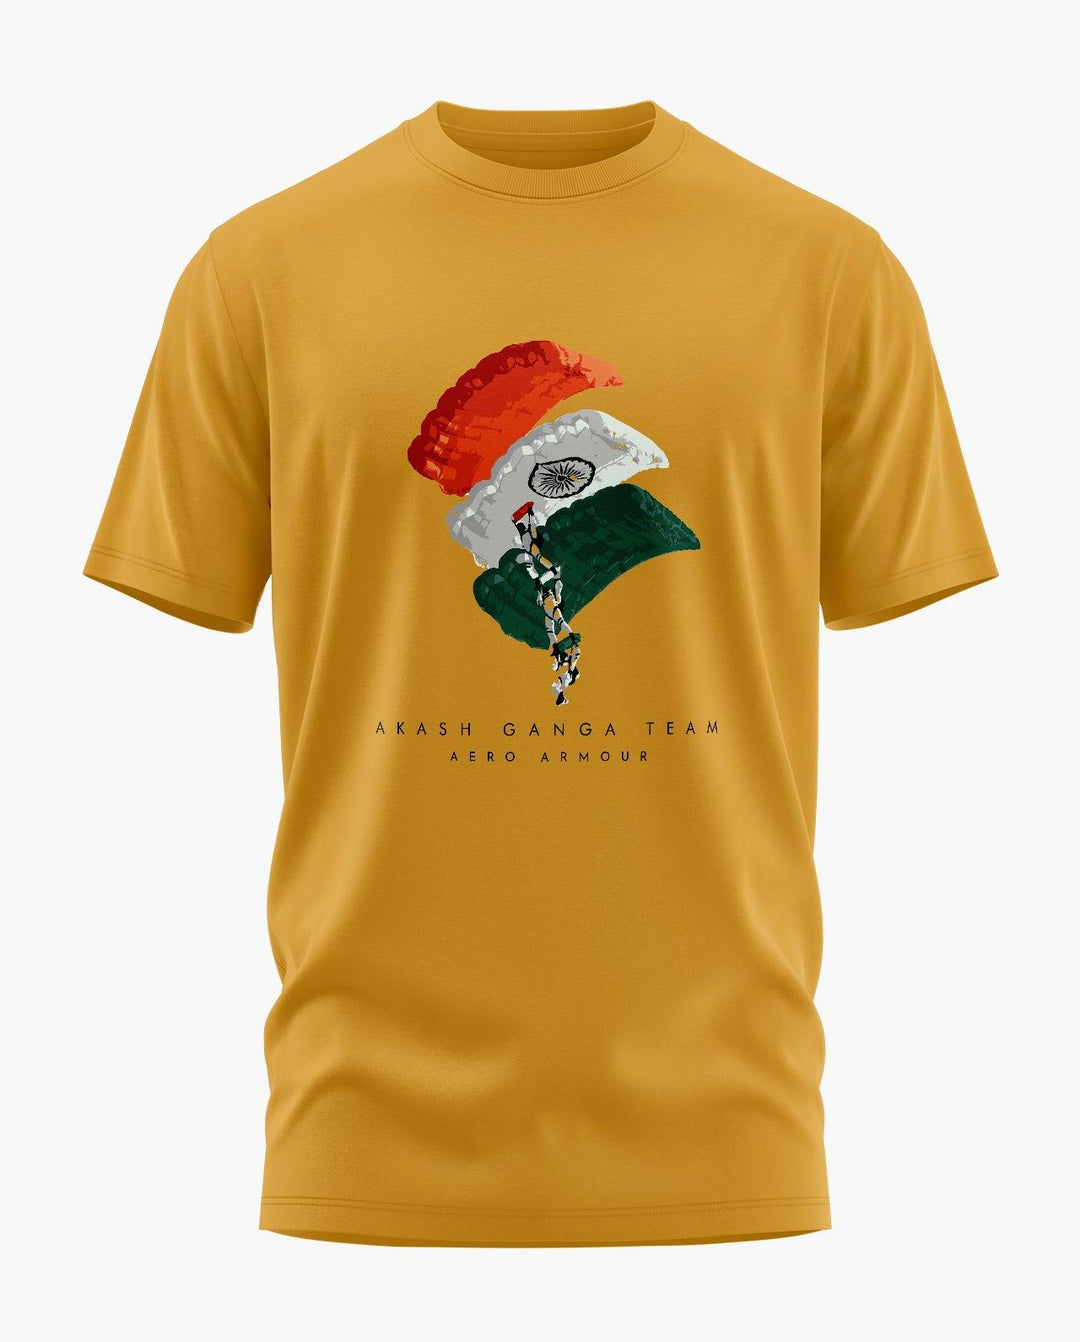 Akash Ganga T-Shirt - Aero Armour